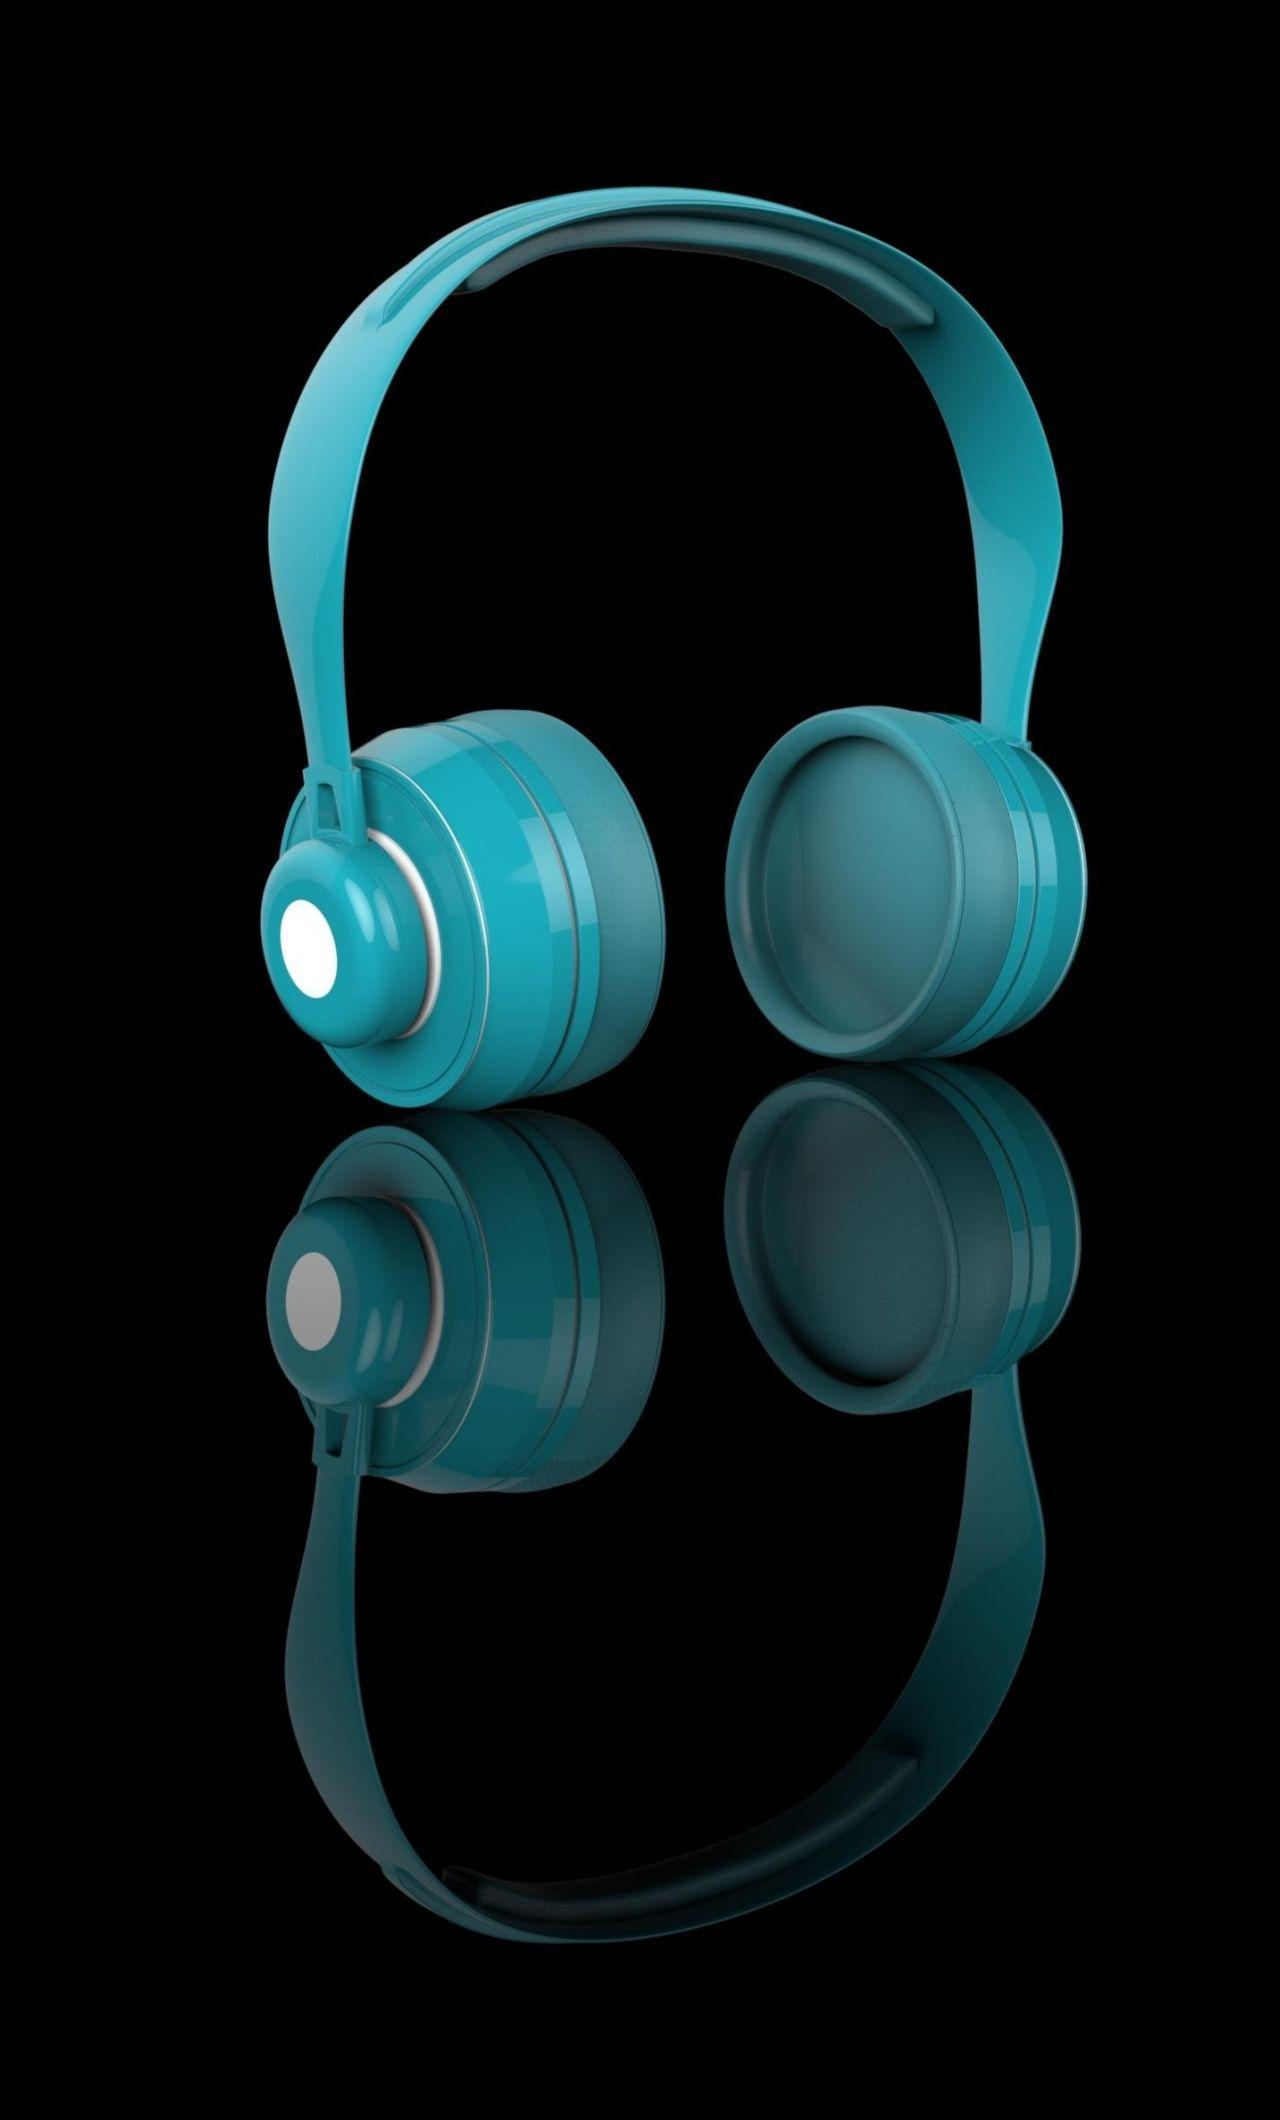 headphones minimalist design